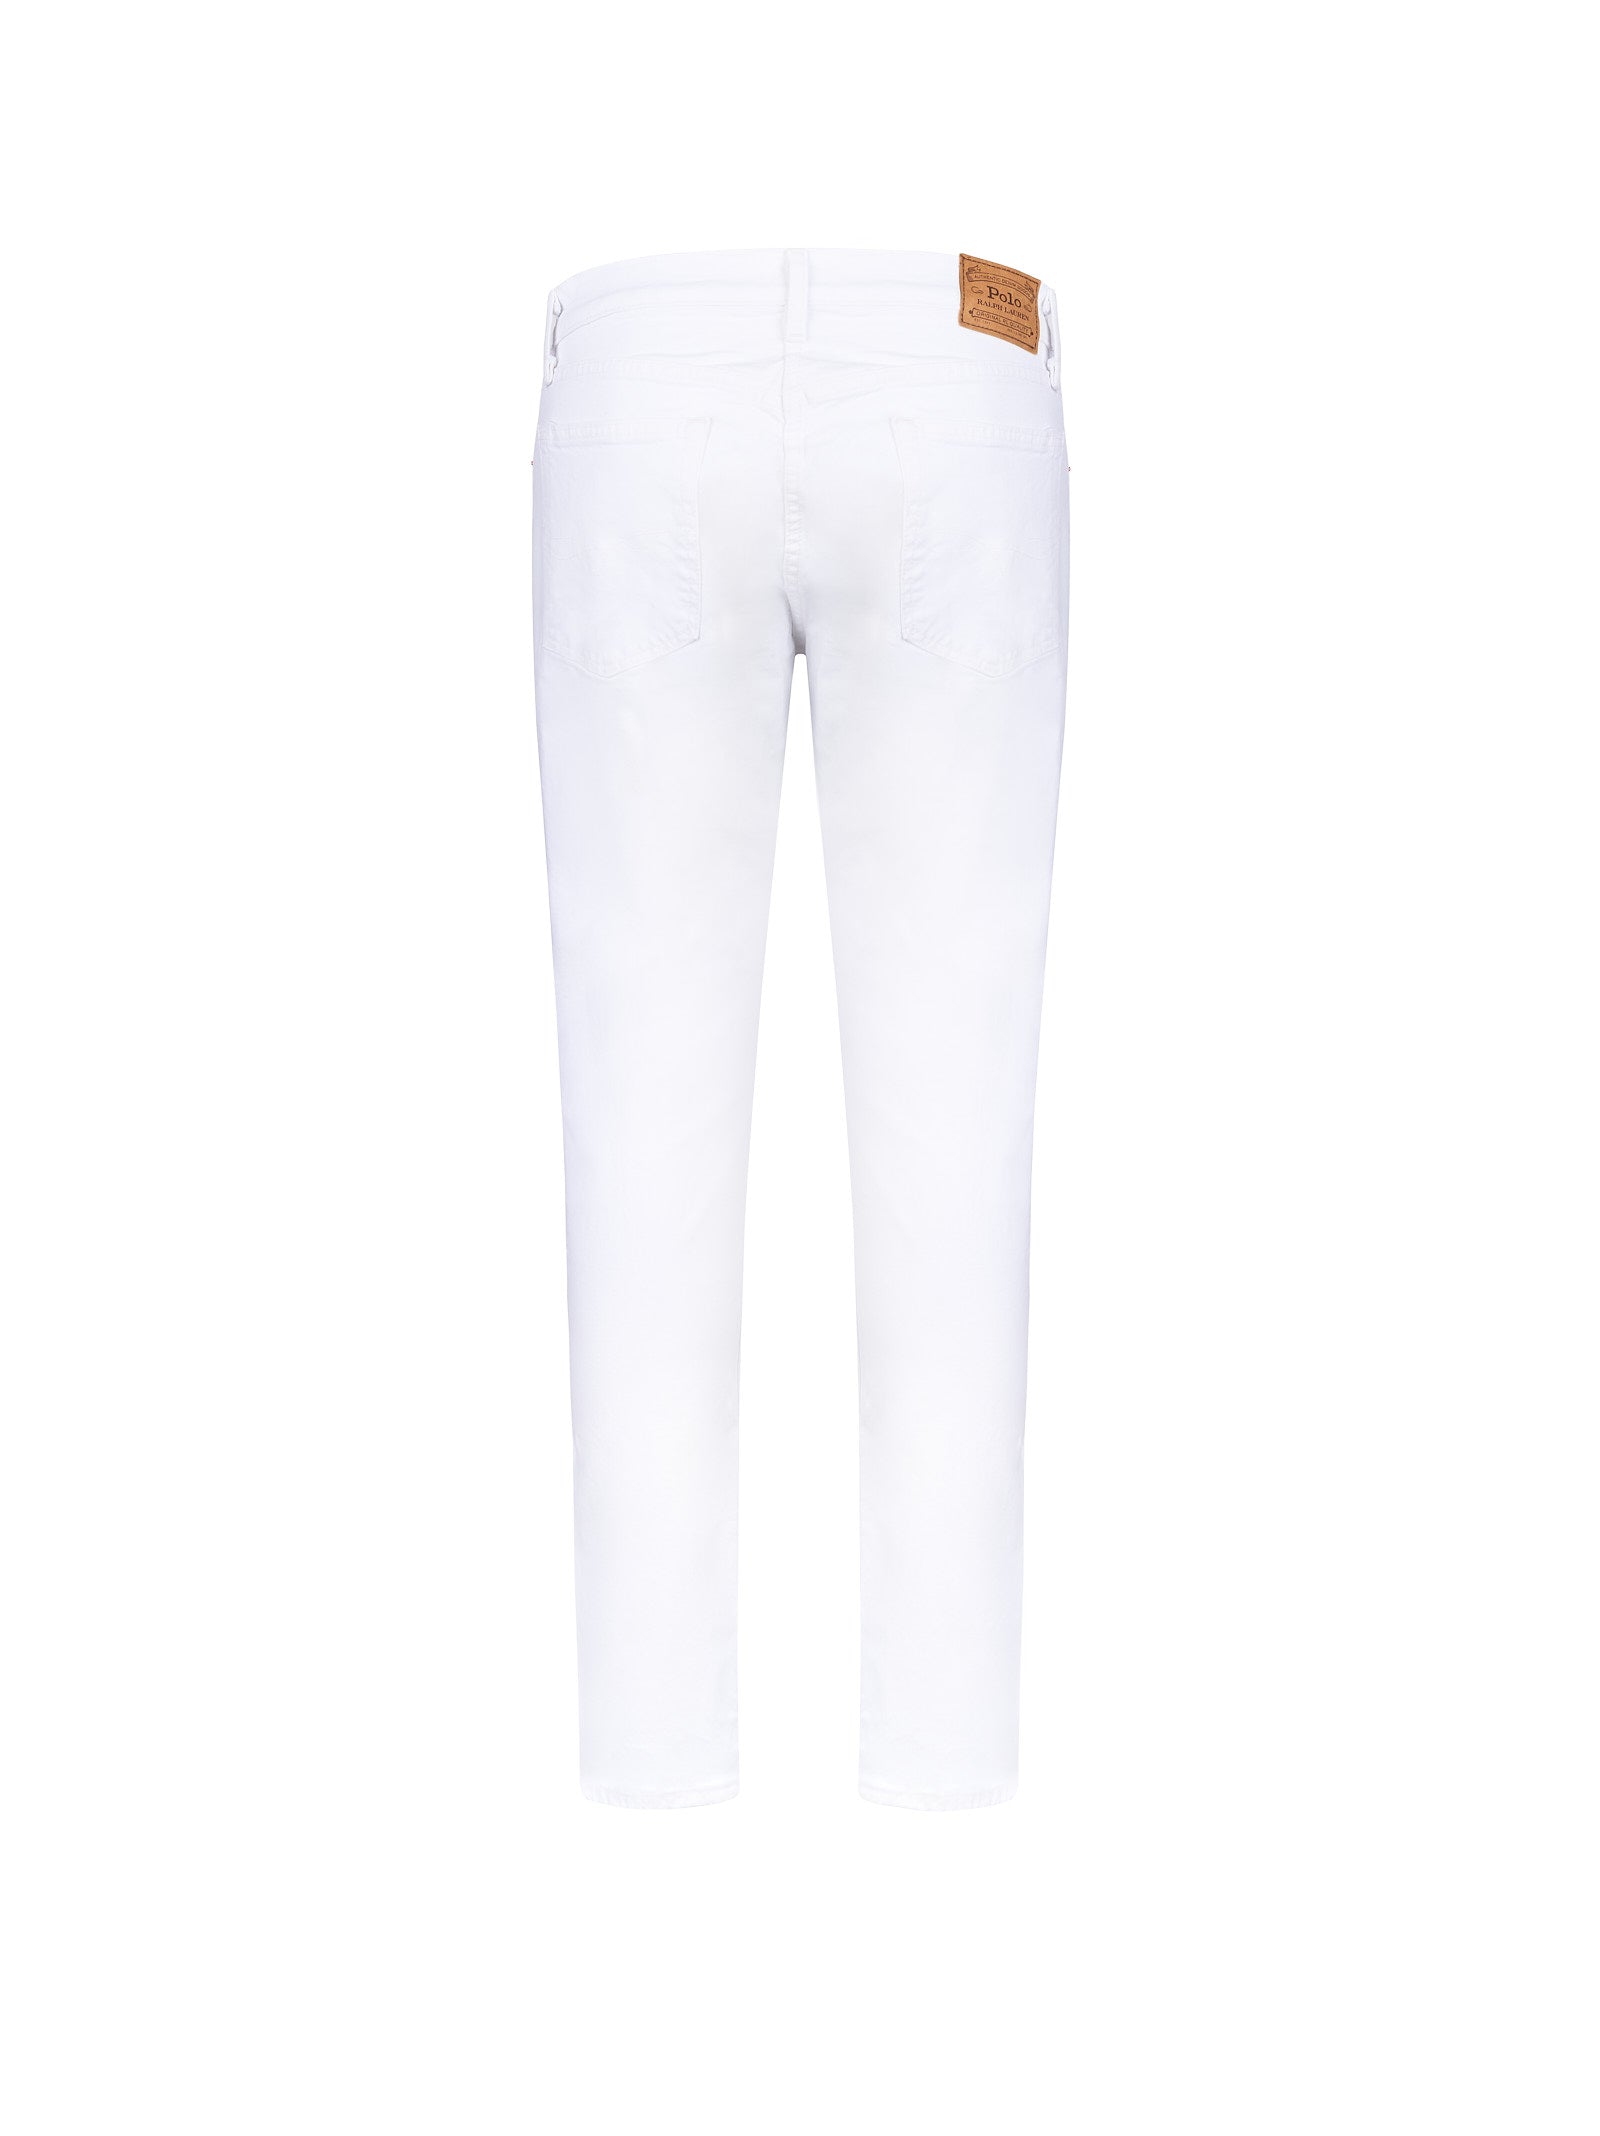 Jeans POLO RALPH LAUREN
Hdn white stretch